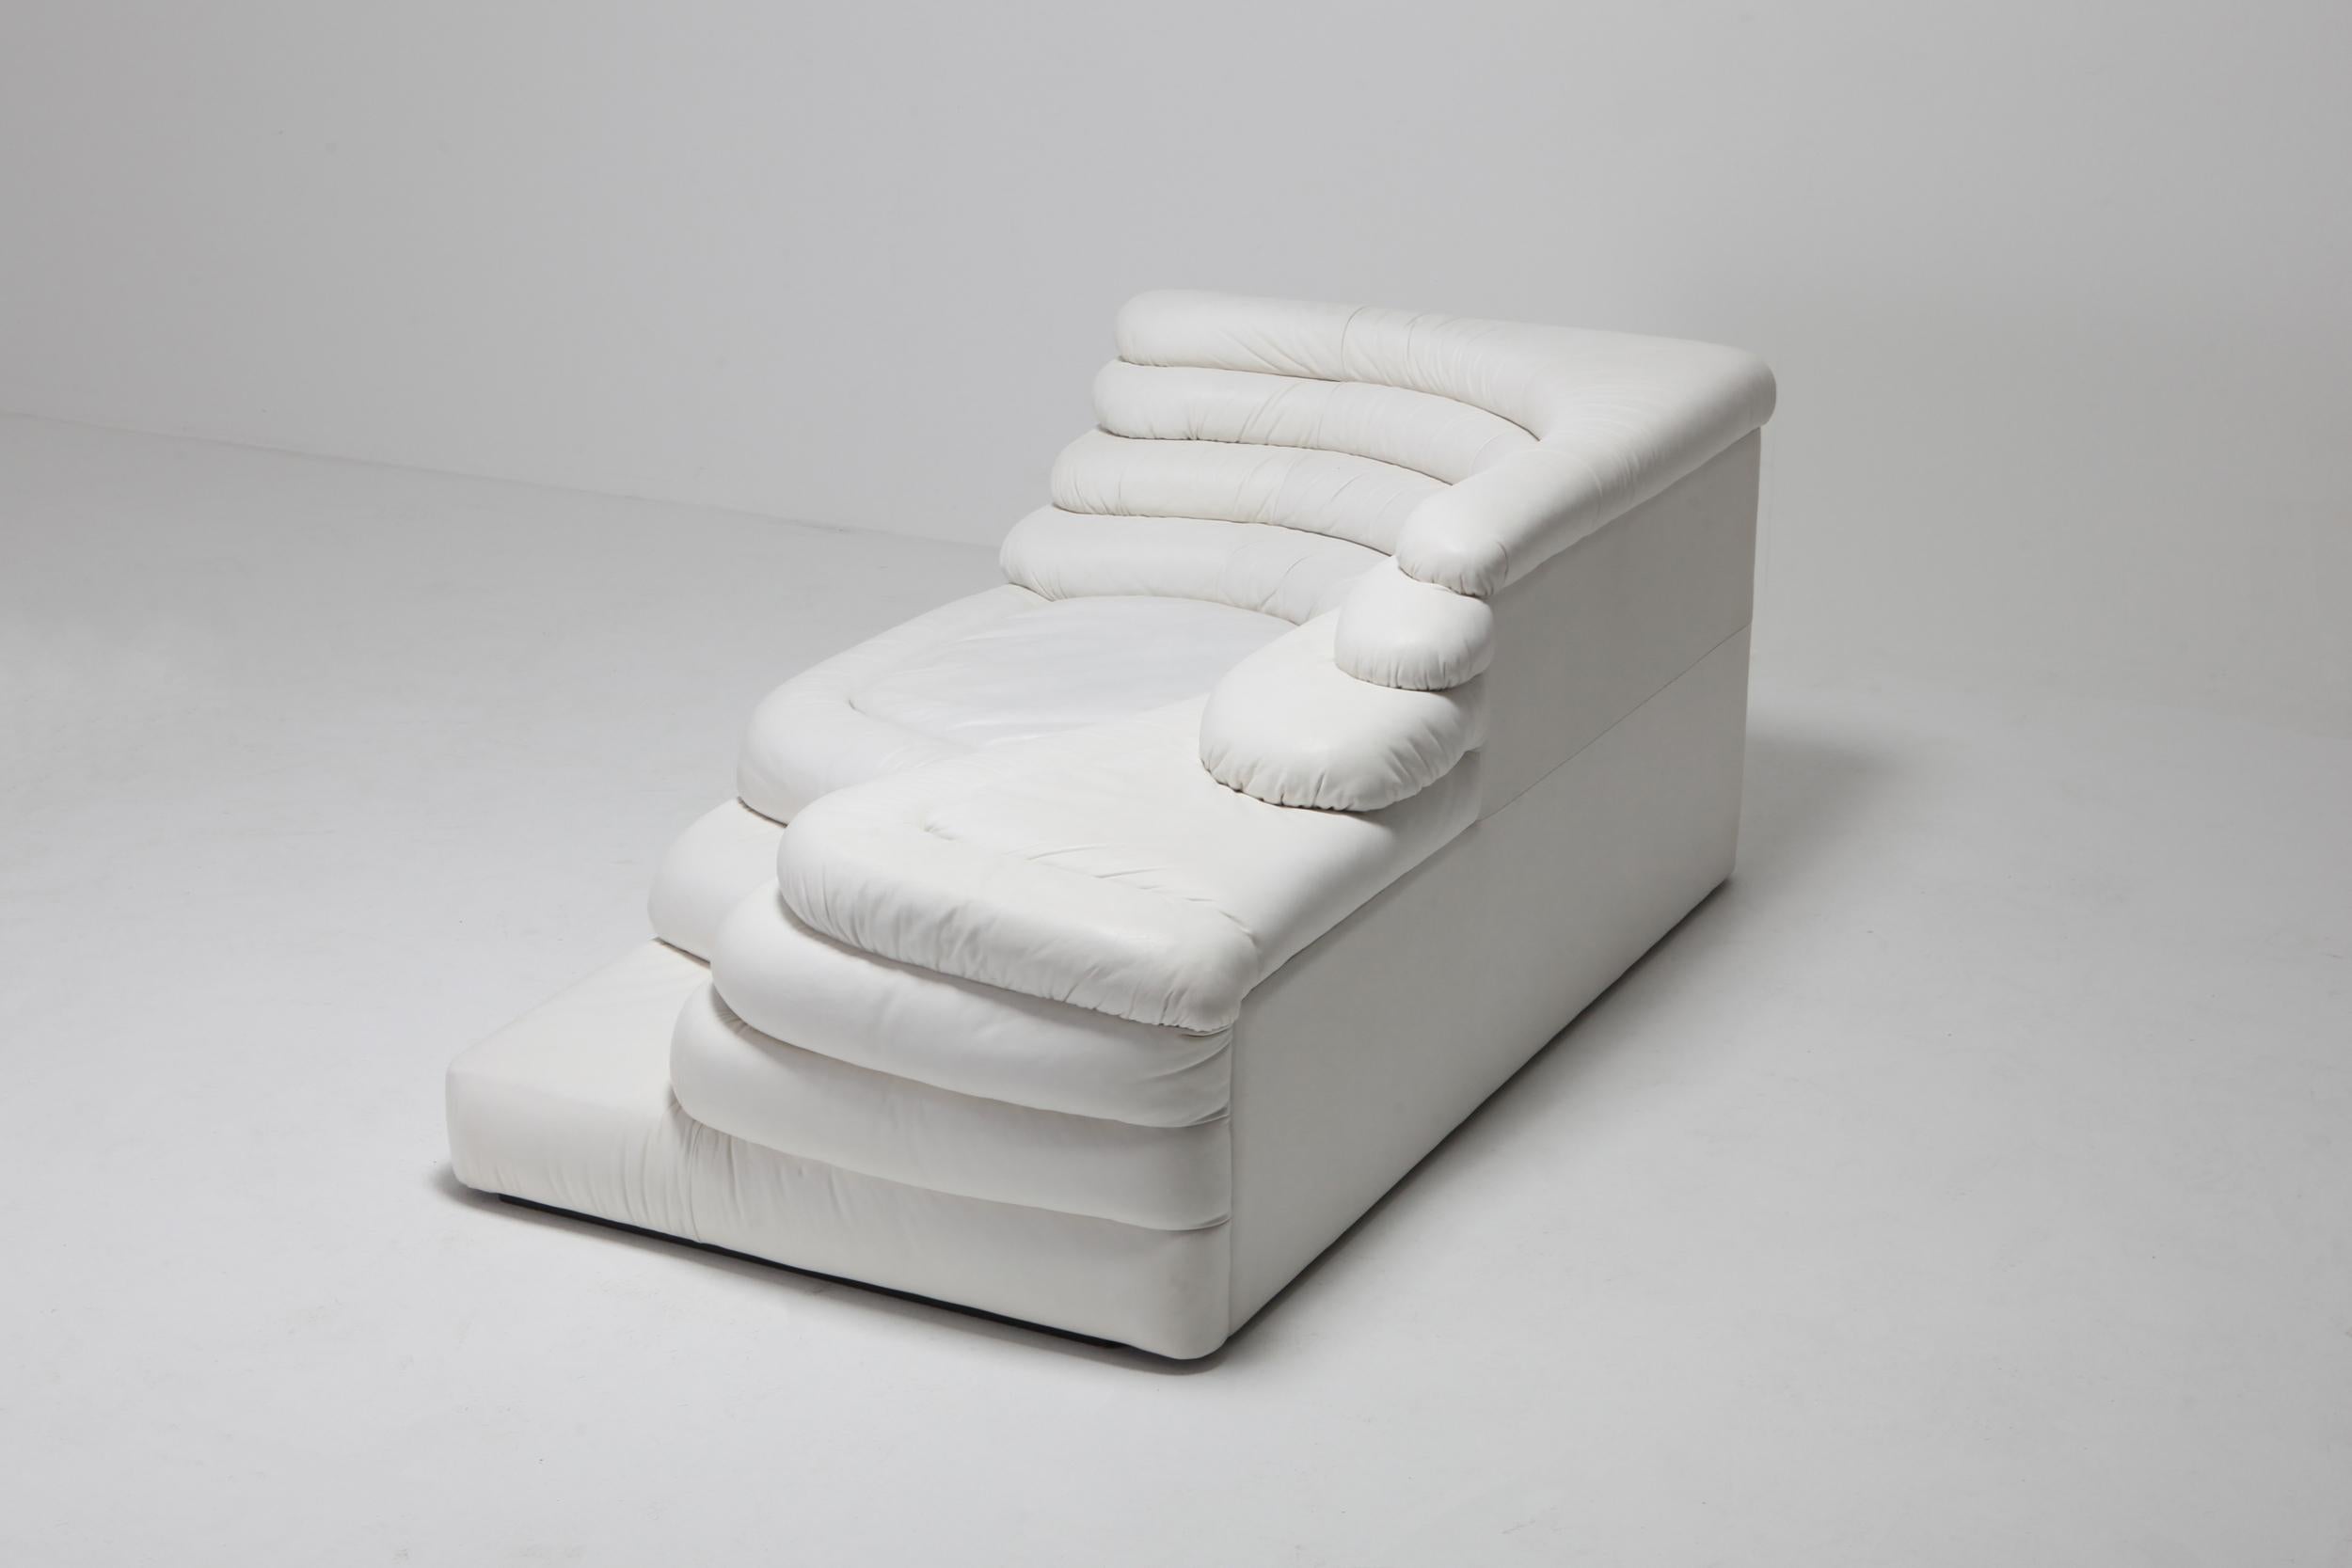 European De Sede 'Terrazza' Lounge Chair in White Leather 1972 by U. Klug & Ueli Berger